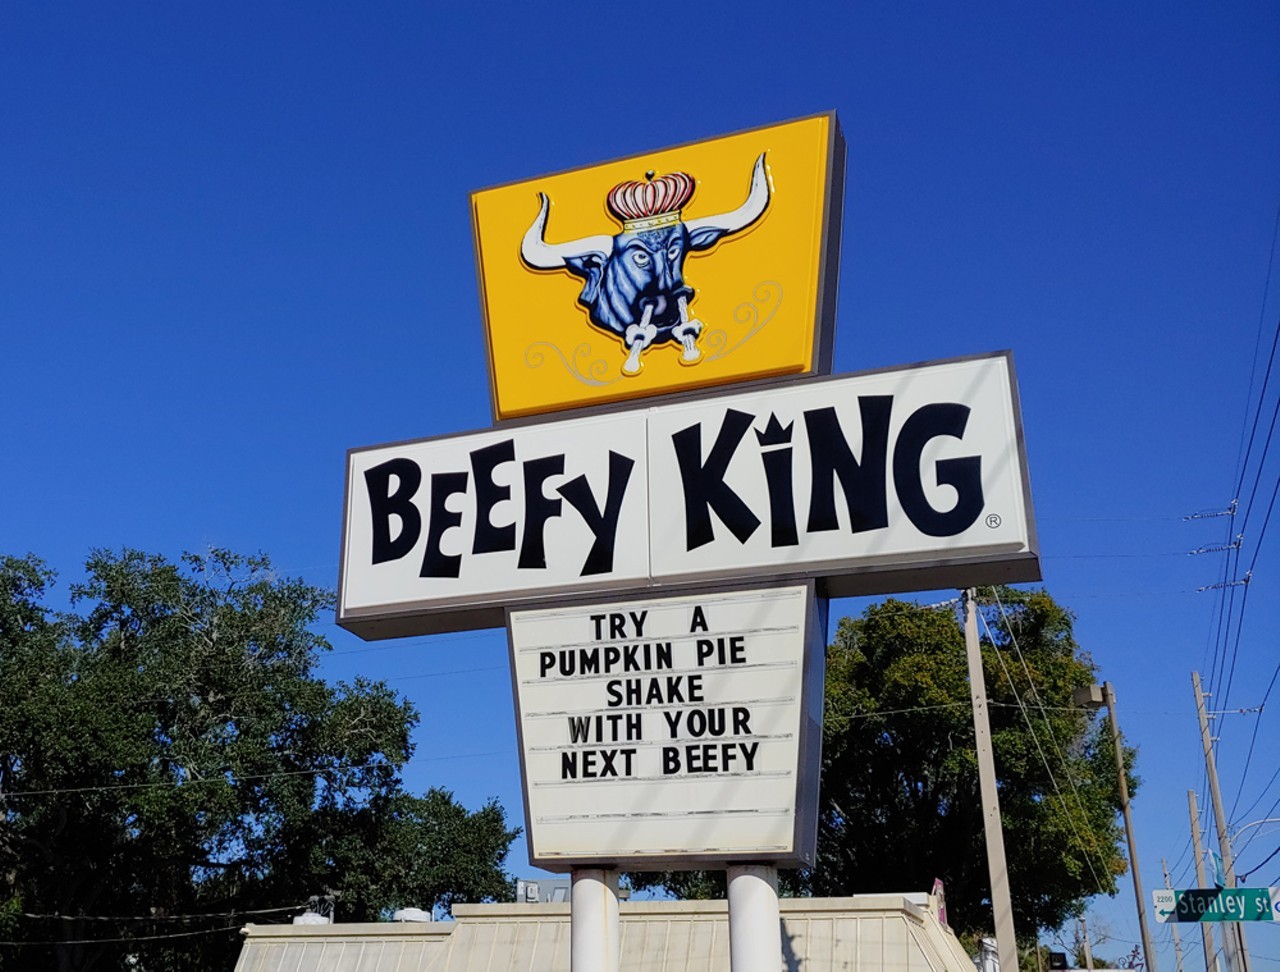 Best Cheap Eats
Winner: Beefy King
Runners-up: Gringos Locos, King Bao